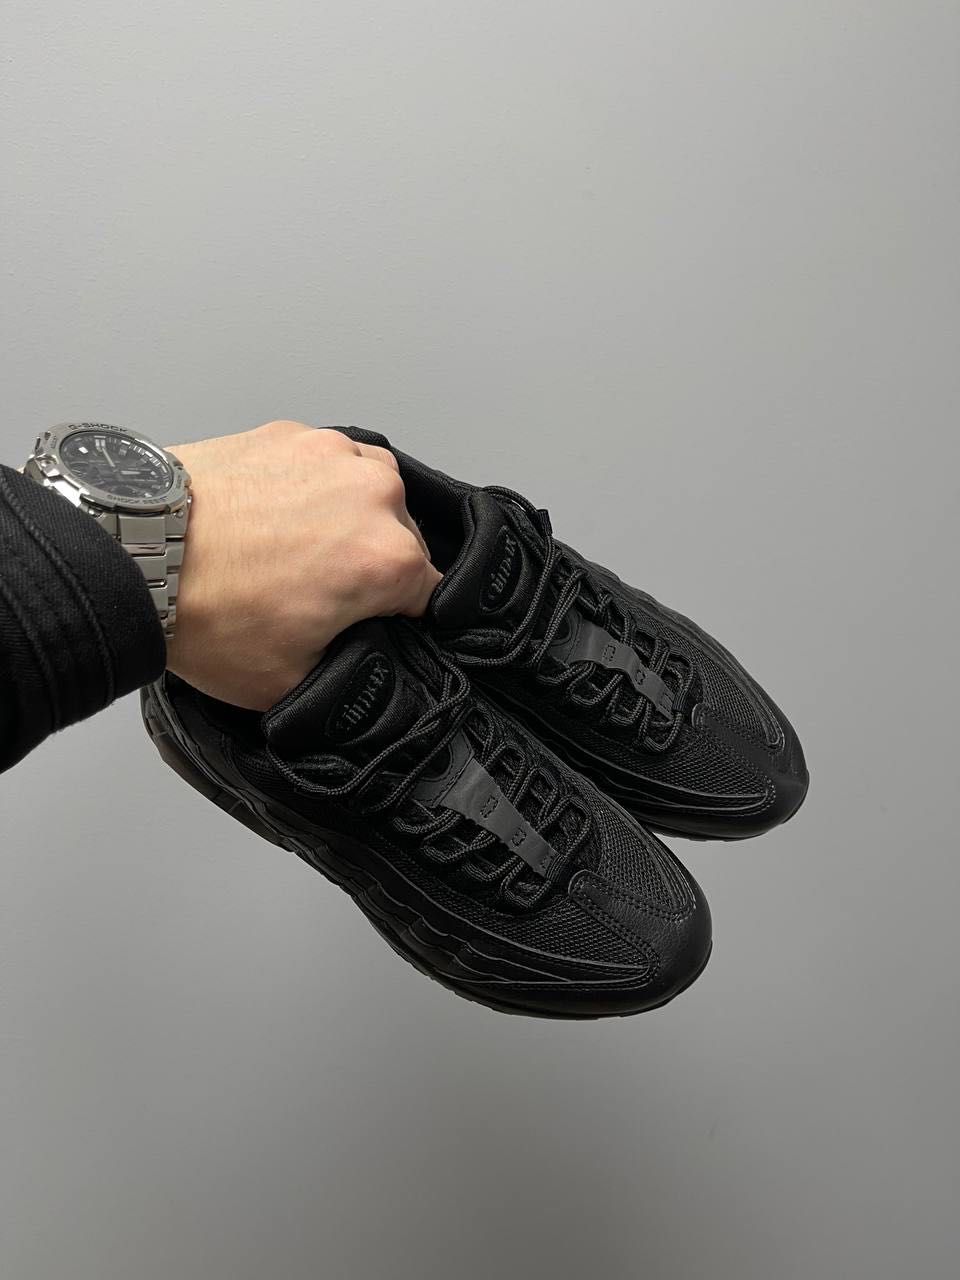 Мужские кроссовки Nike Air Max 95 ‘Black’ Размеры 40-45